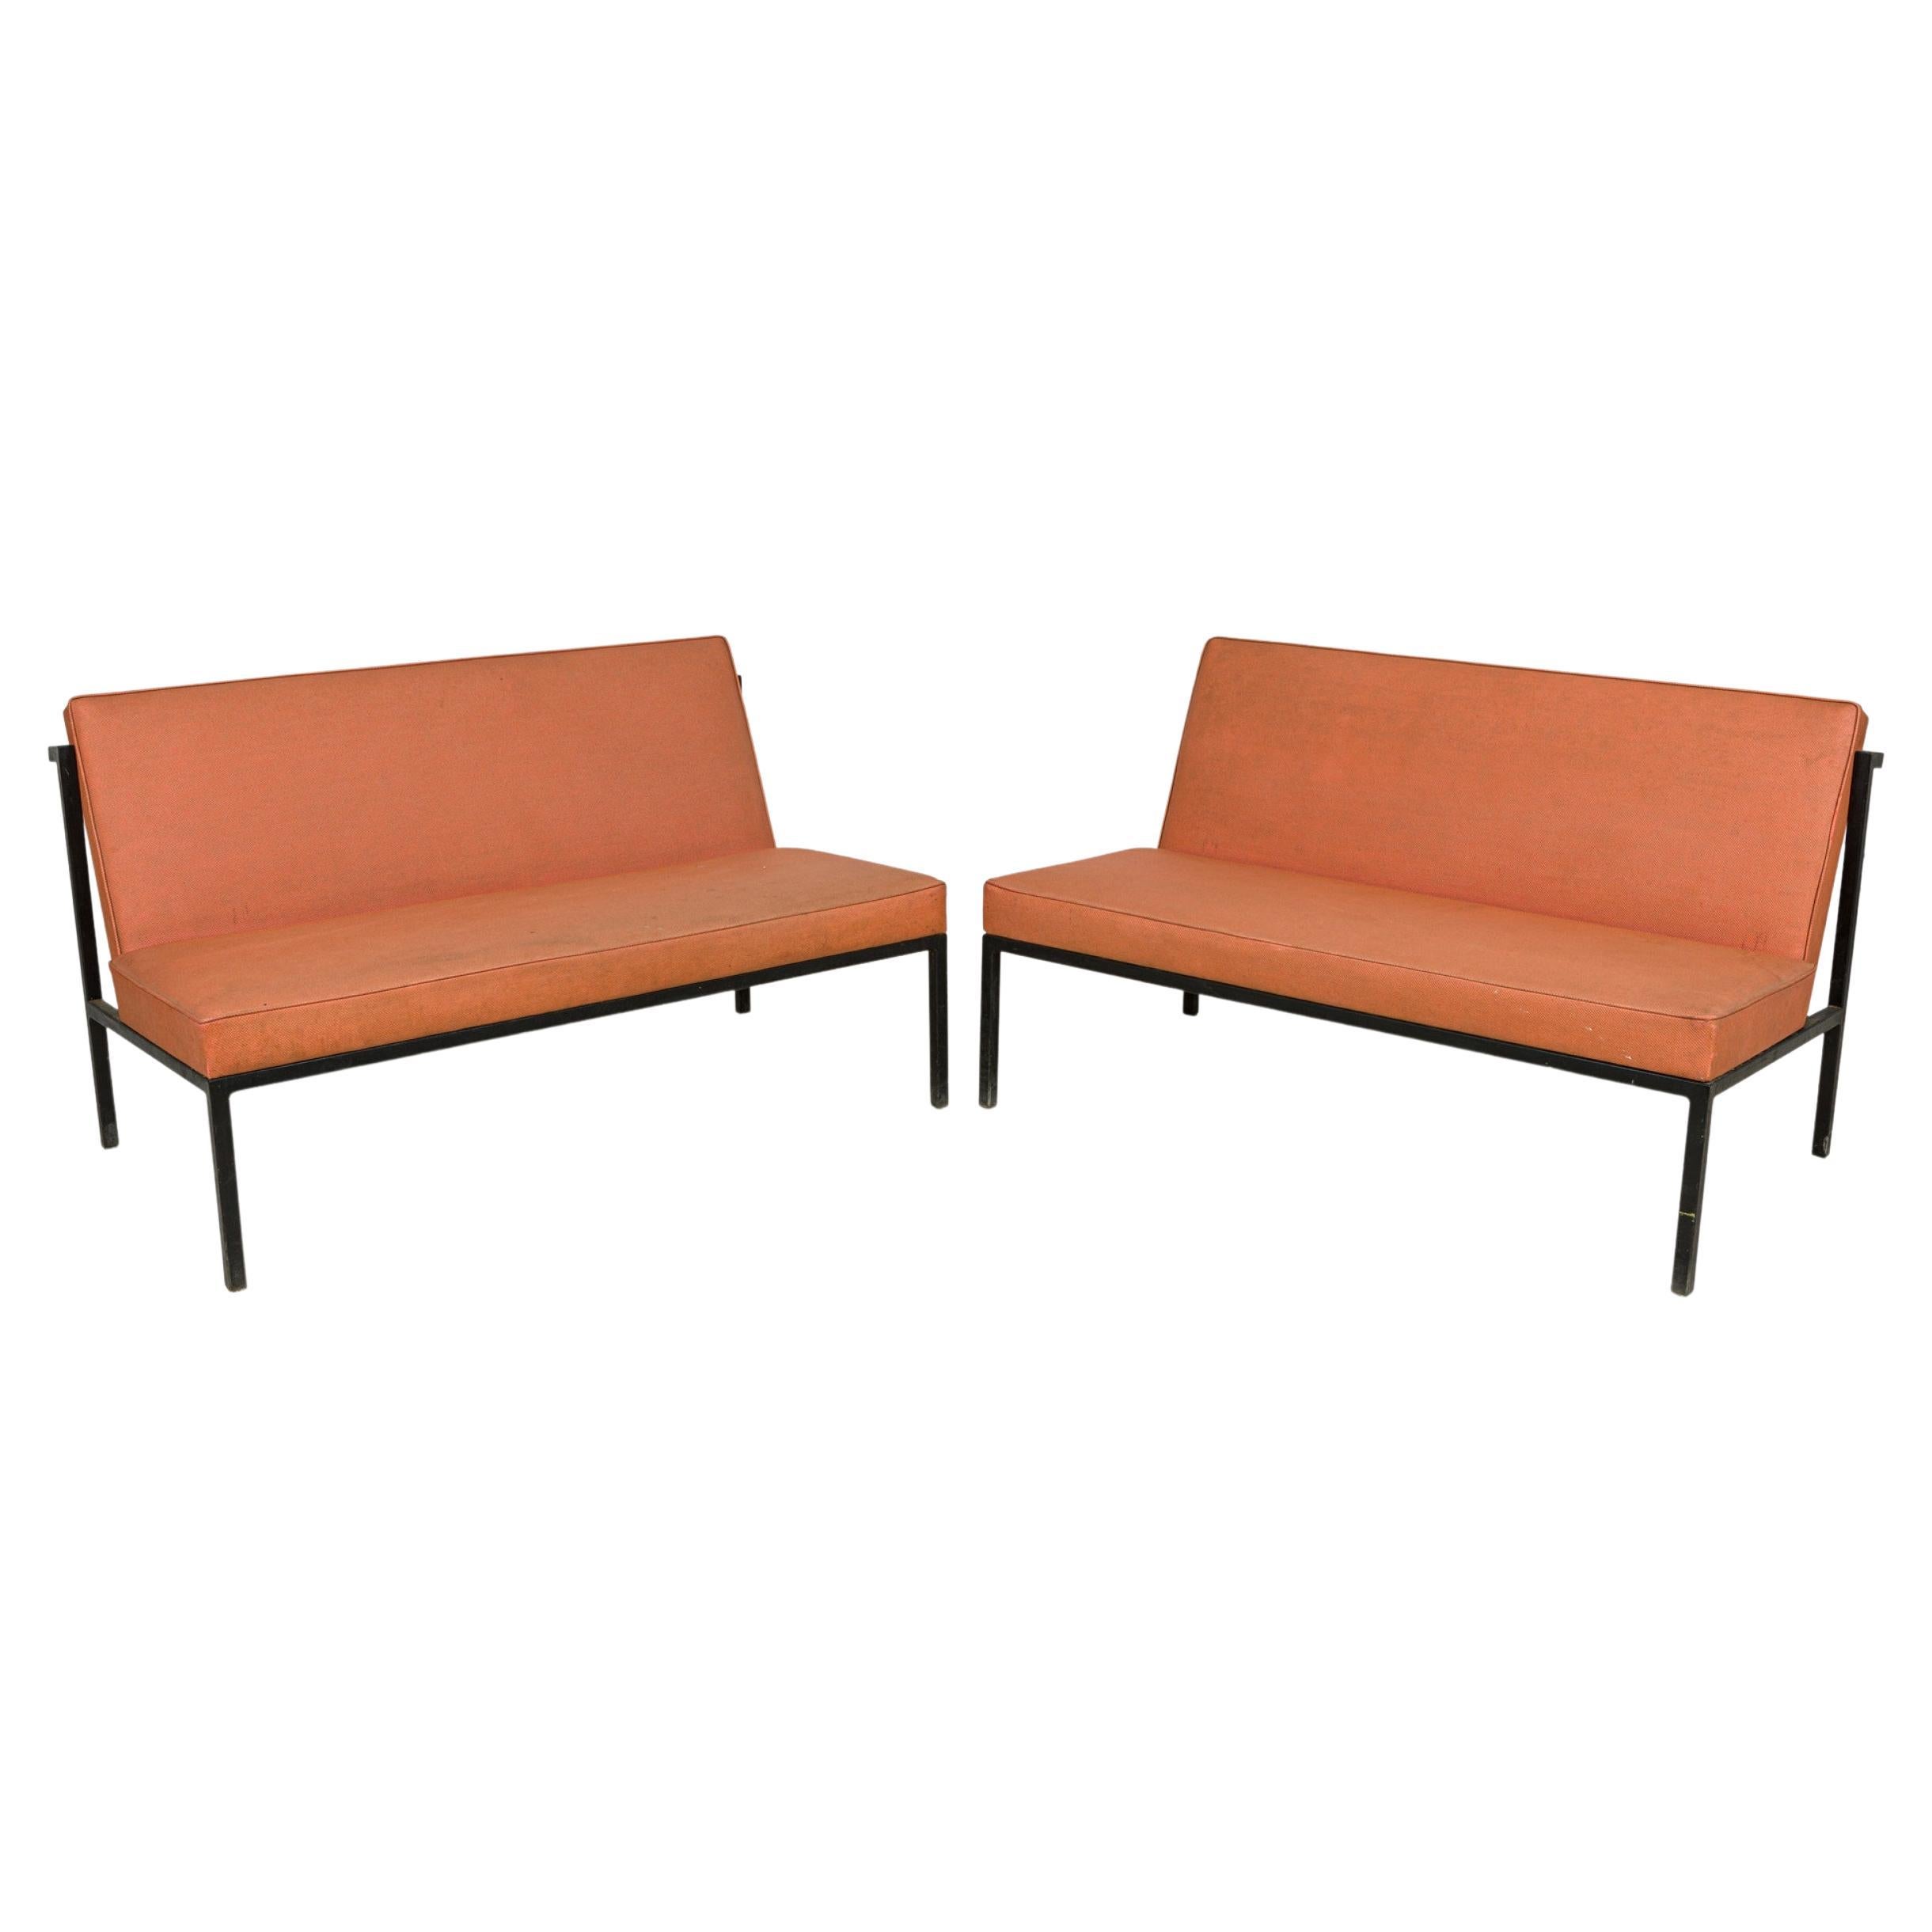 Pair of Florence Knoll / Knoll Light Orange Upholstered Settees